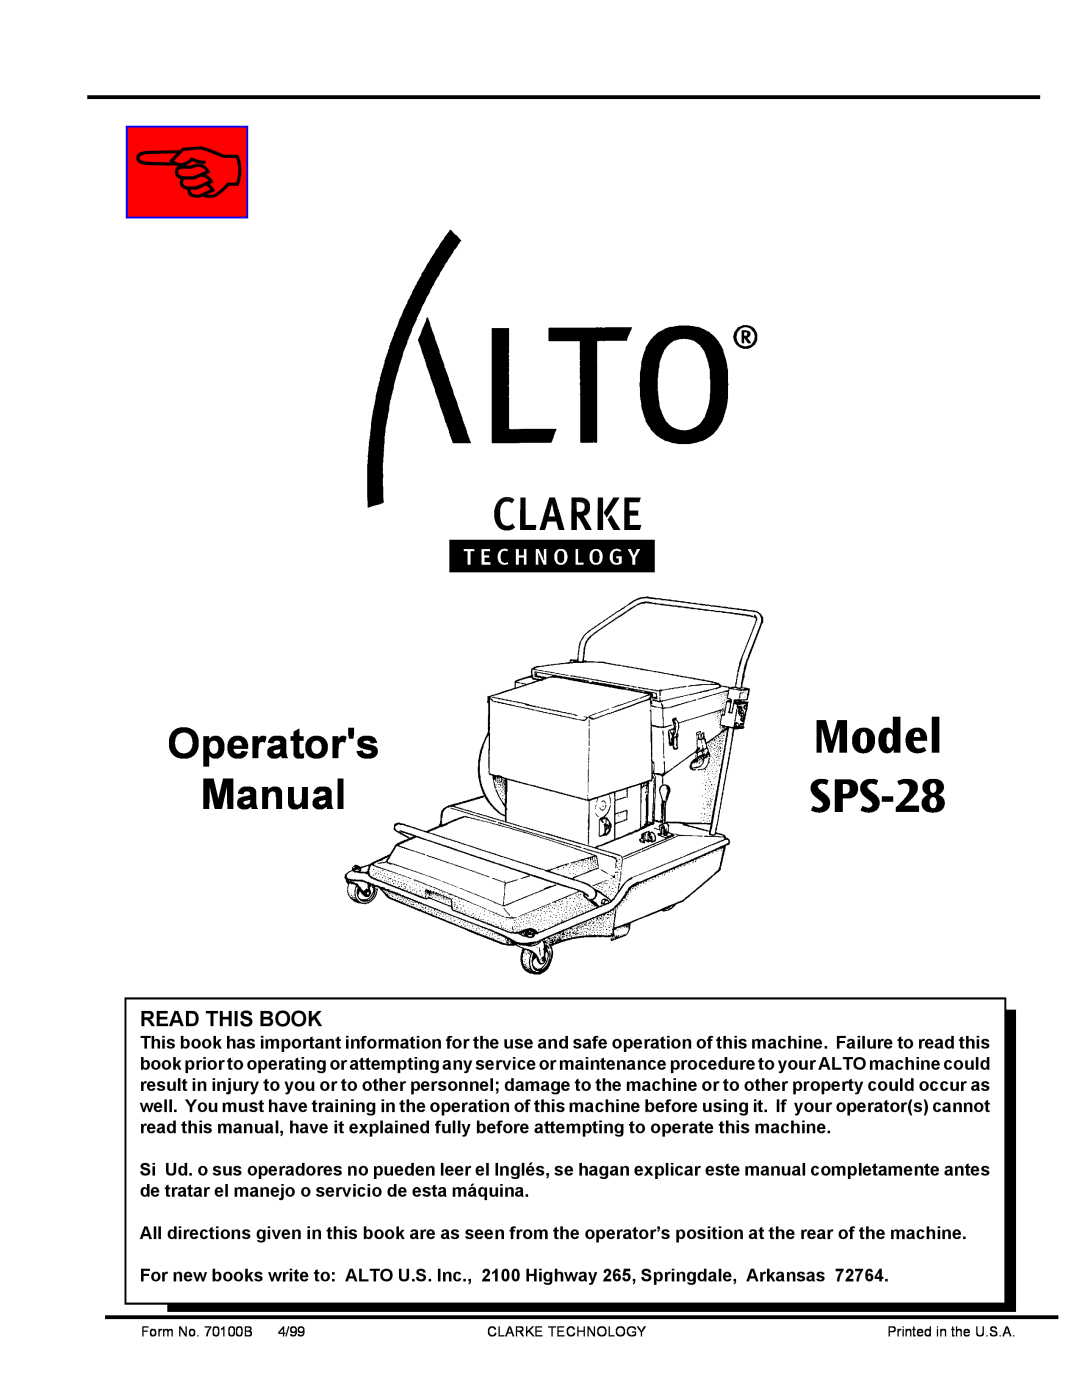 Nilfisk-ALTO SPS-28 E manual Operators Manual, Model SPS-28, Read This Book 